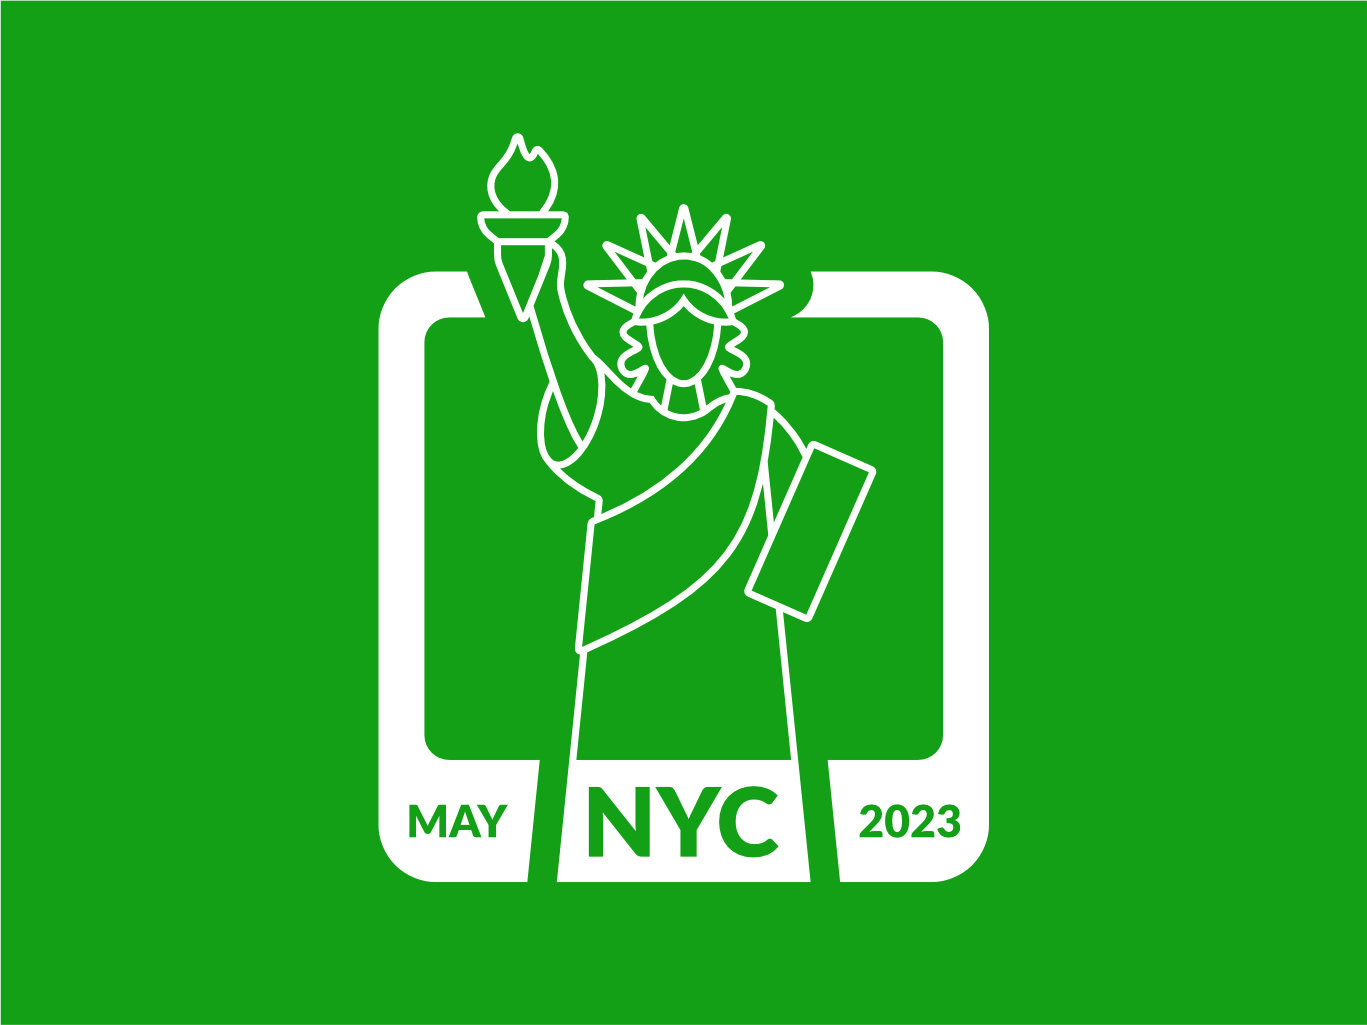 Passport style stamp for New York City